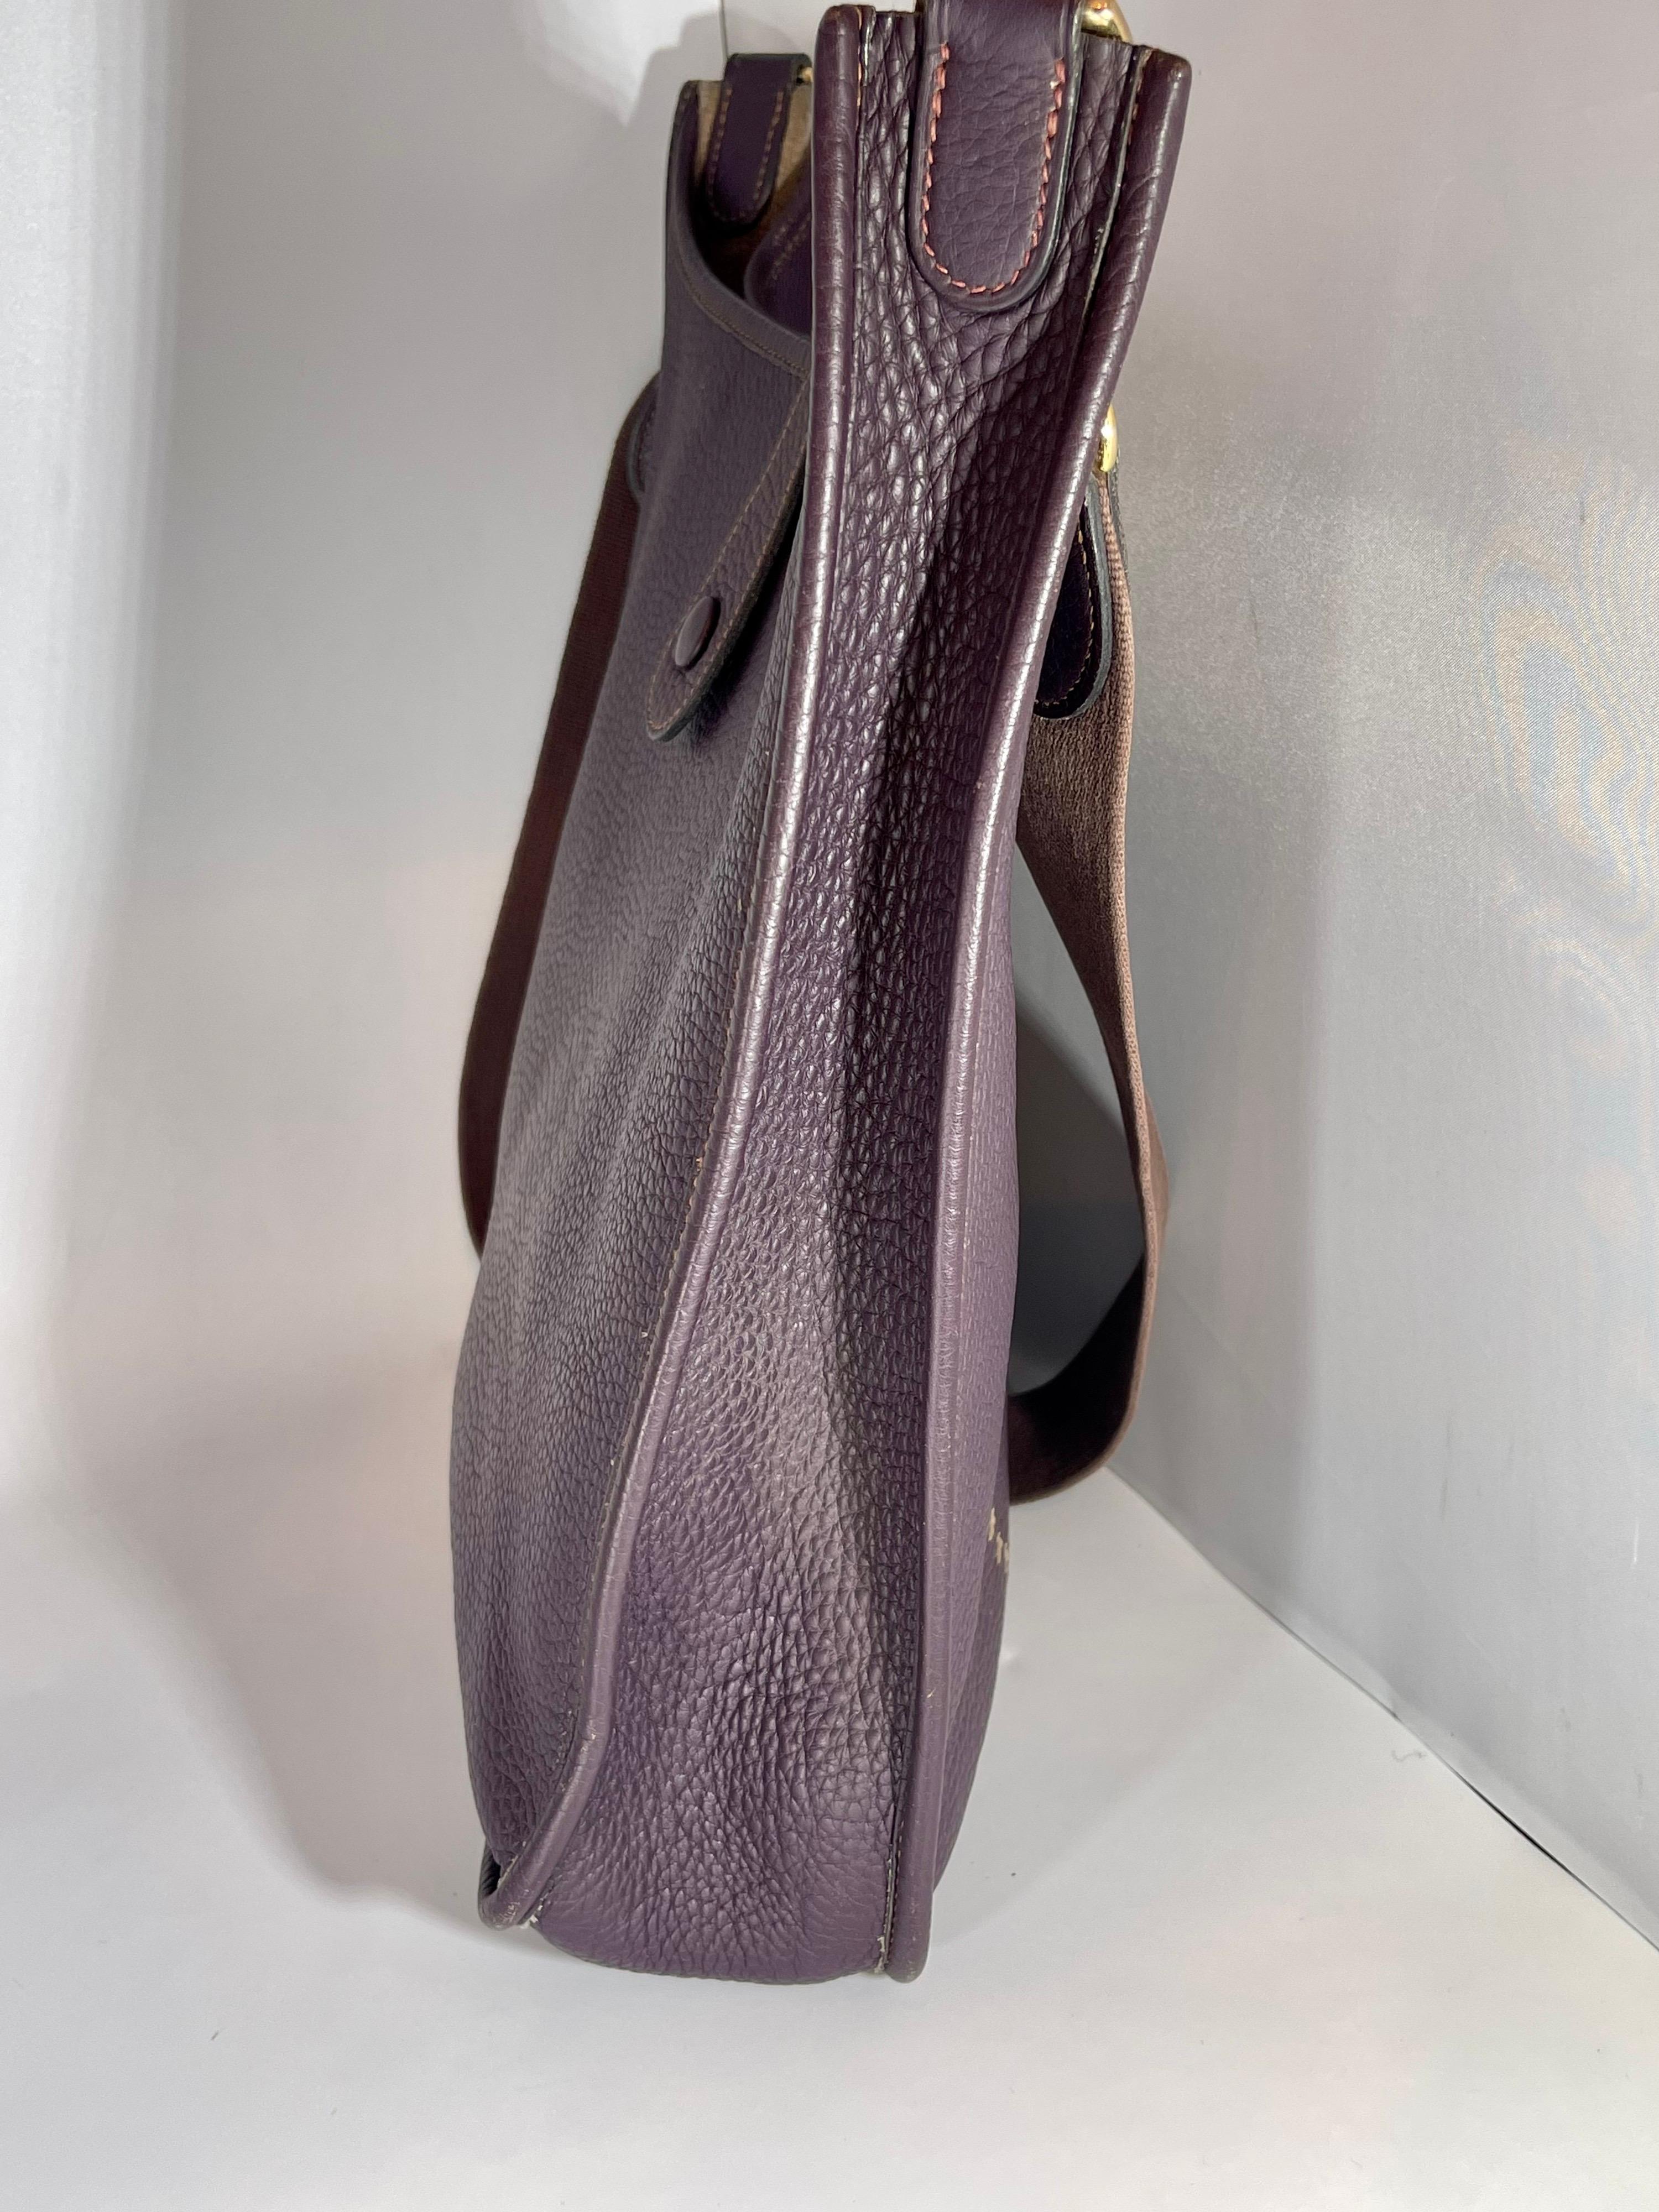 Hermès Evelyne Pm Dark Brown / Chocolate Leather Cross Body Bag Like New For Sale 2